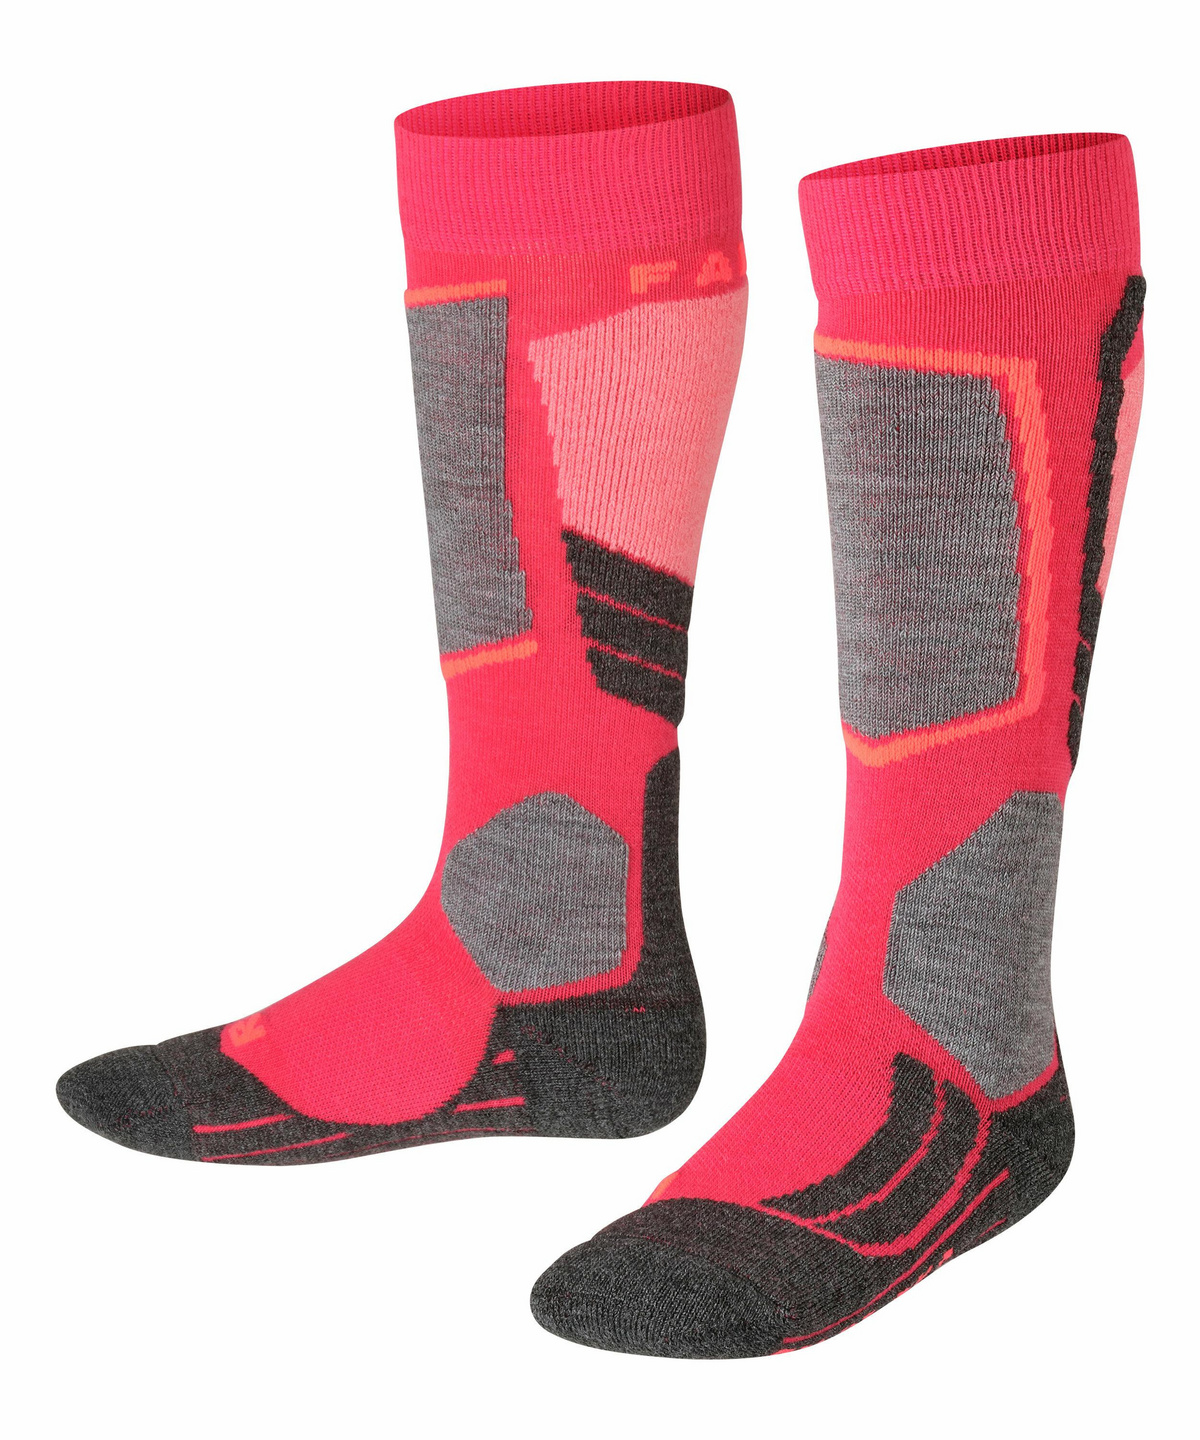 childrens red knee high socks